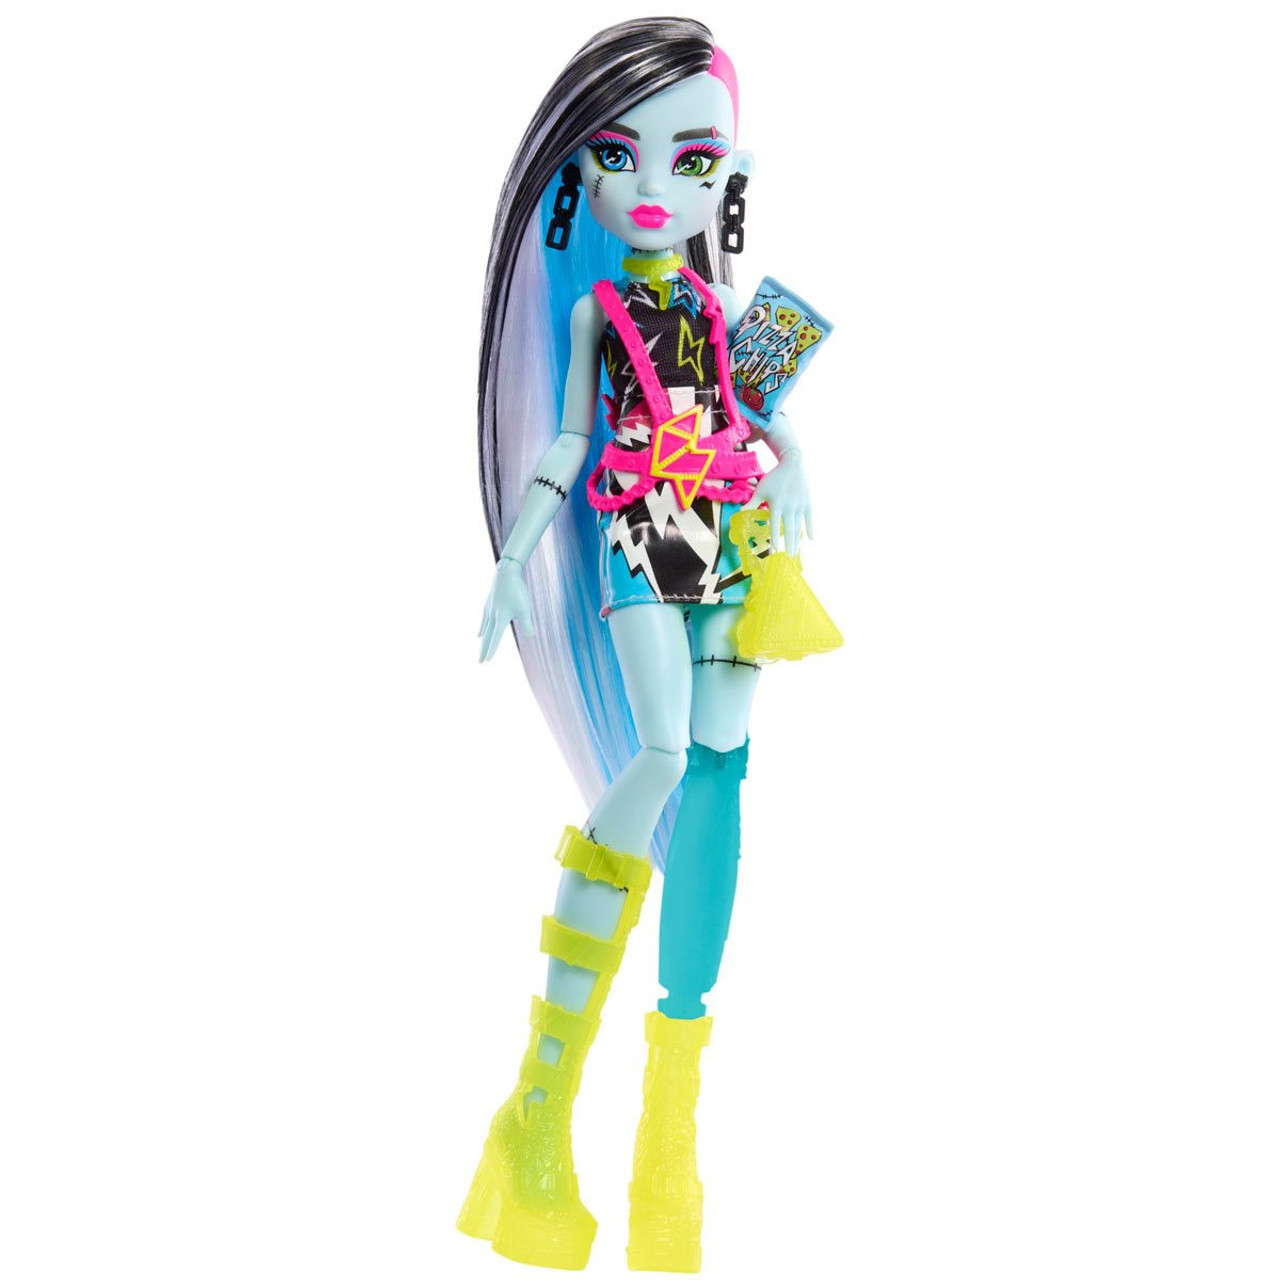 Monster High Skulltimate Secrets Neon Frights series 3 dolls 